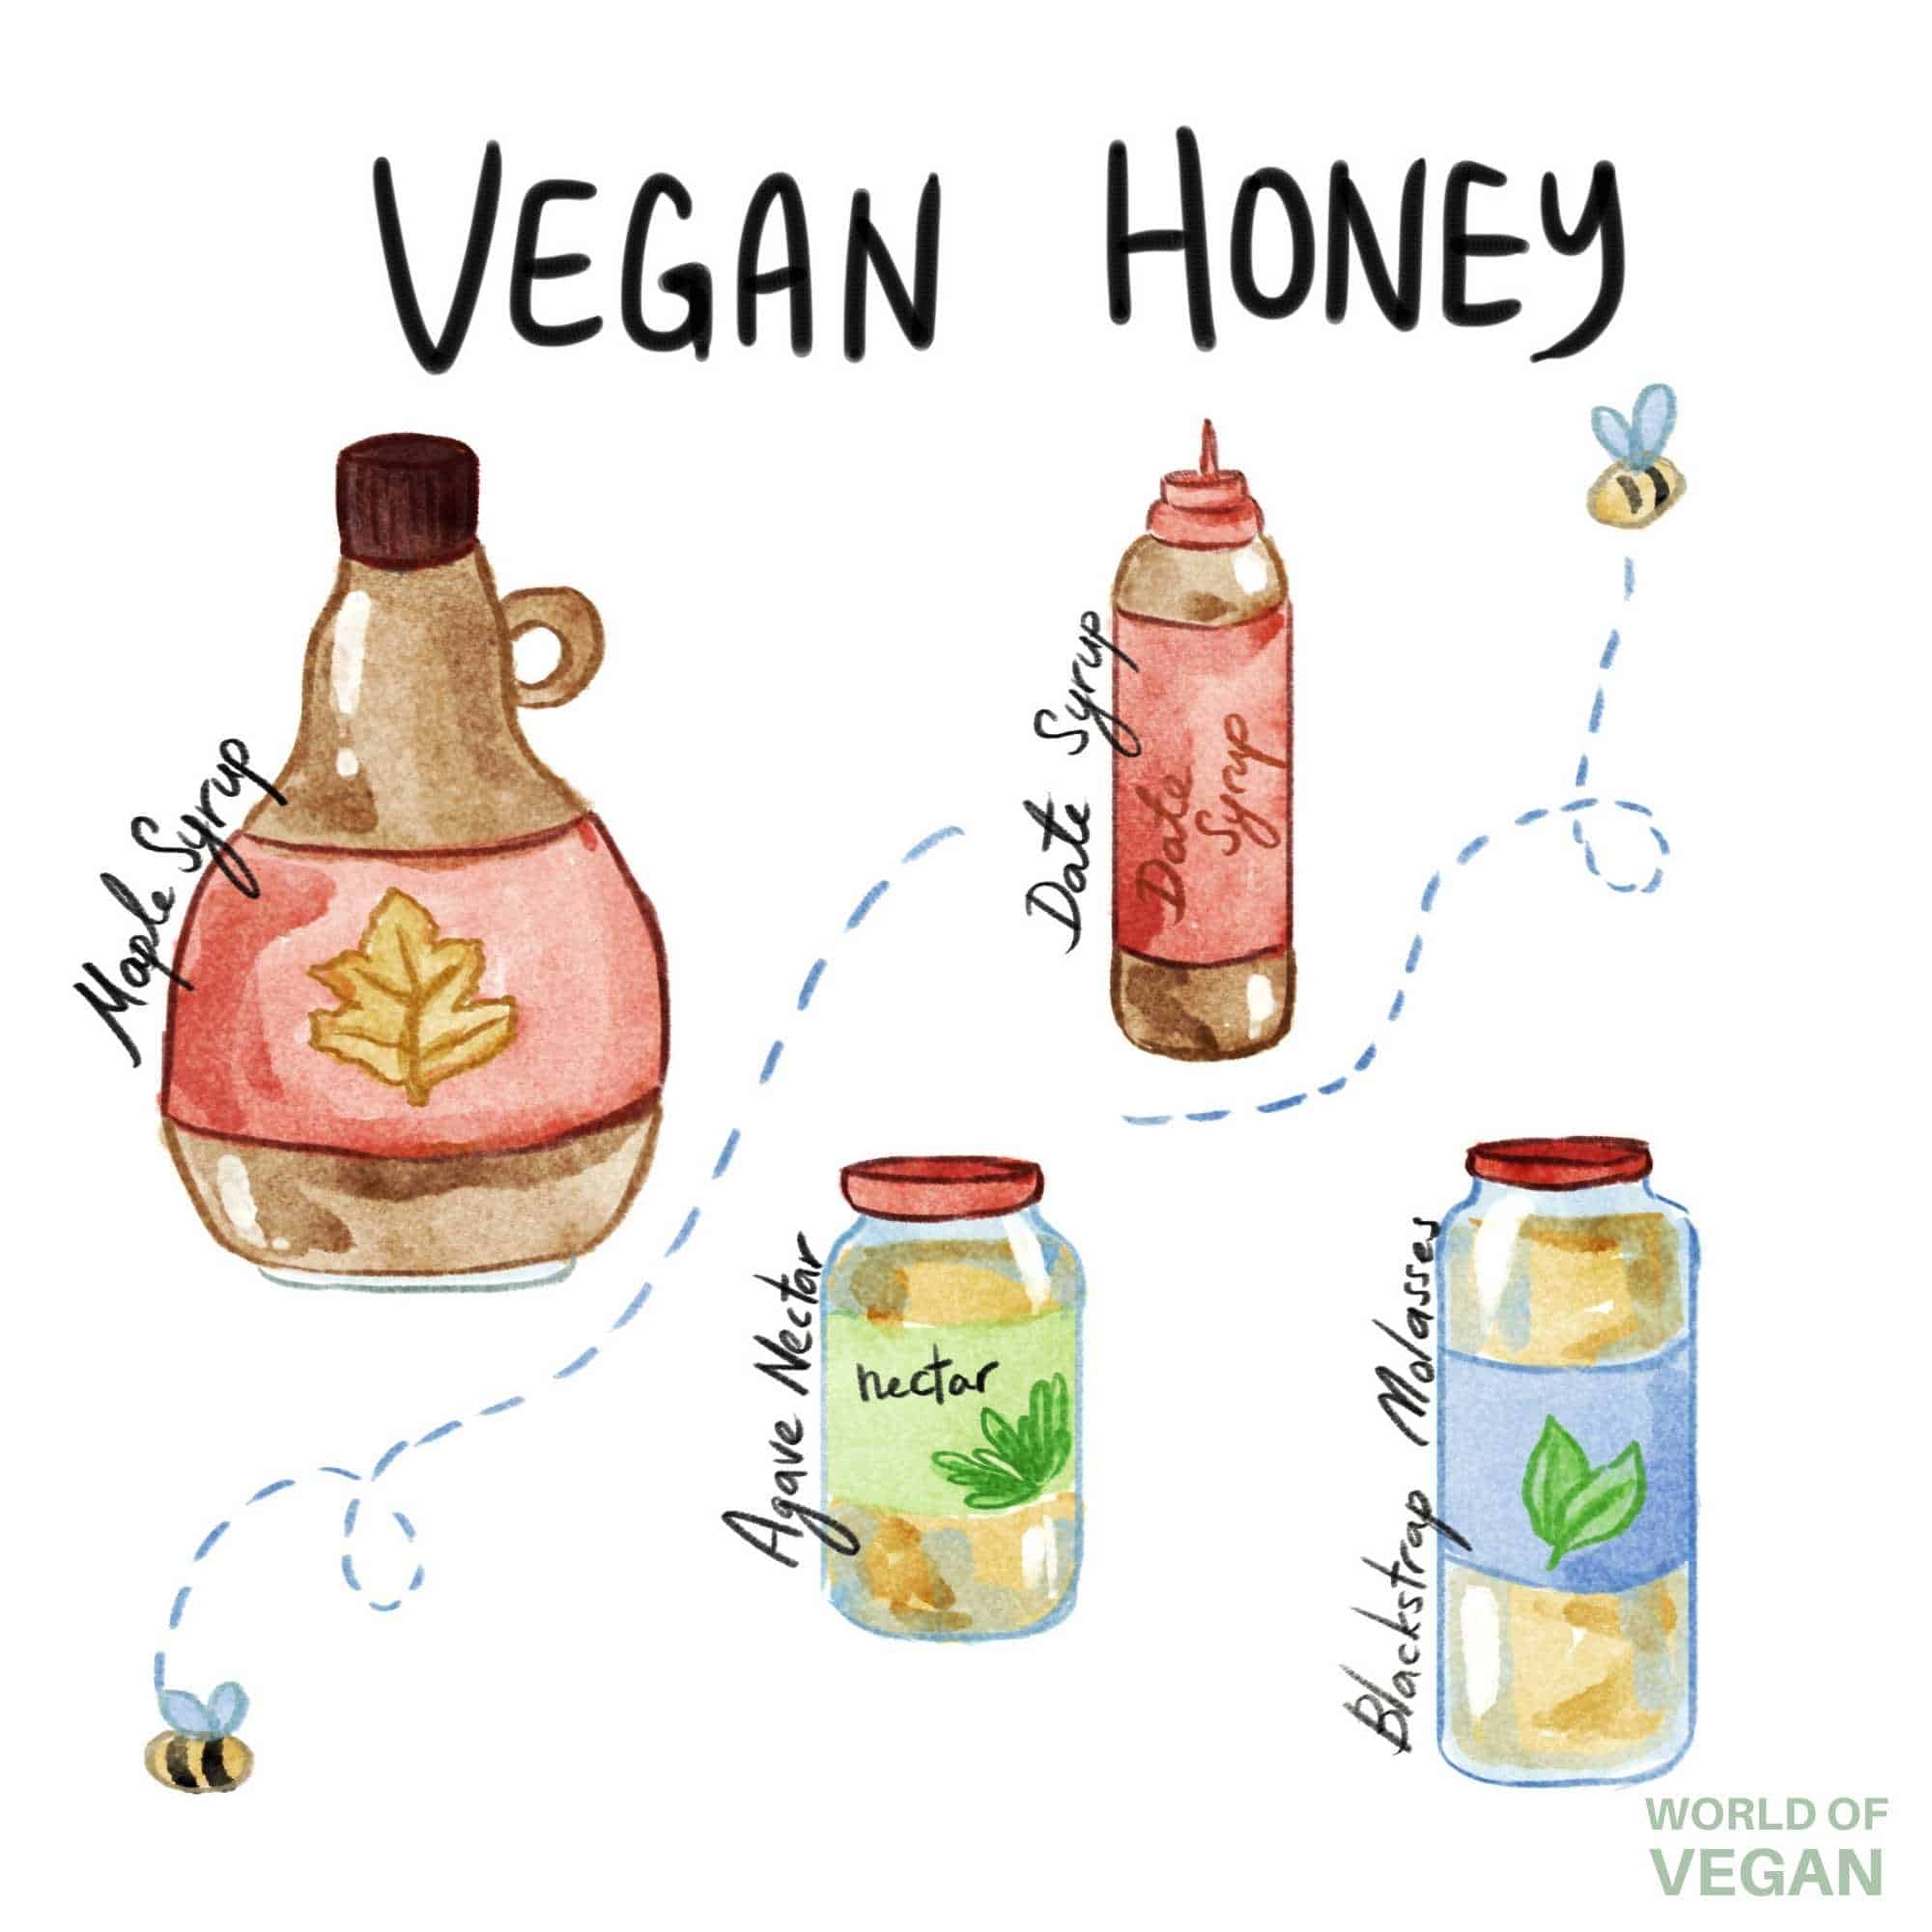 World of Vegan honey alternatives art illustration featuring agave, maple, molasses, date syrup, and apple honey.